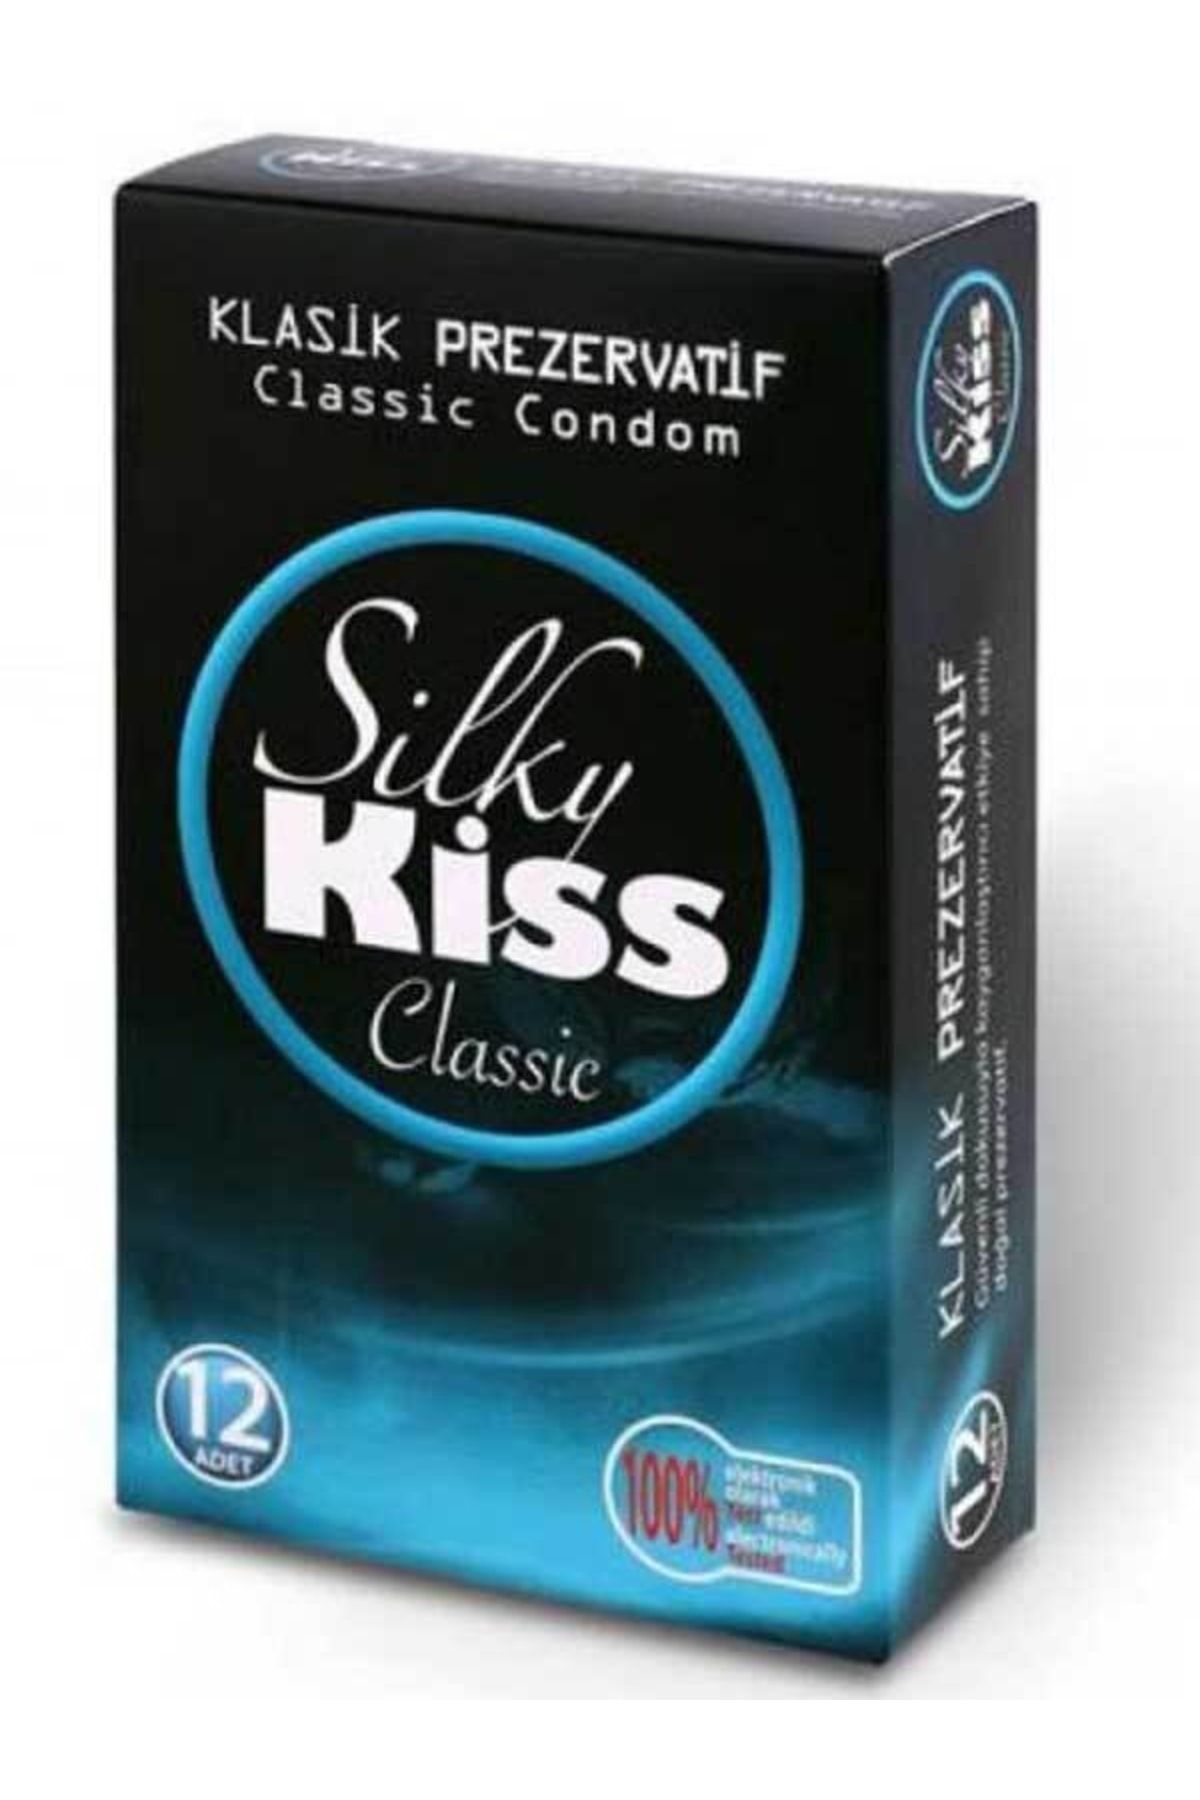 Silky Kiss River World Prezervatif 12'li Klasik